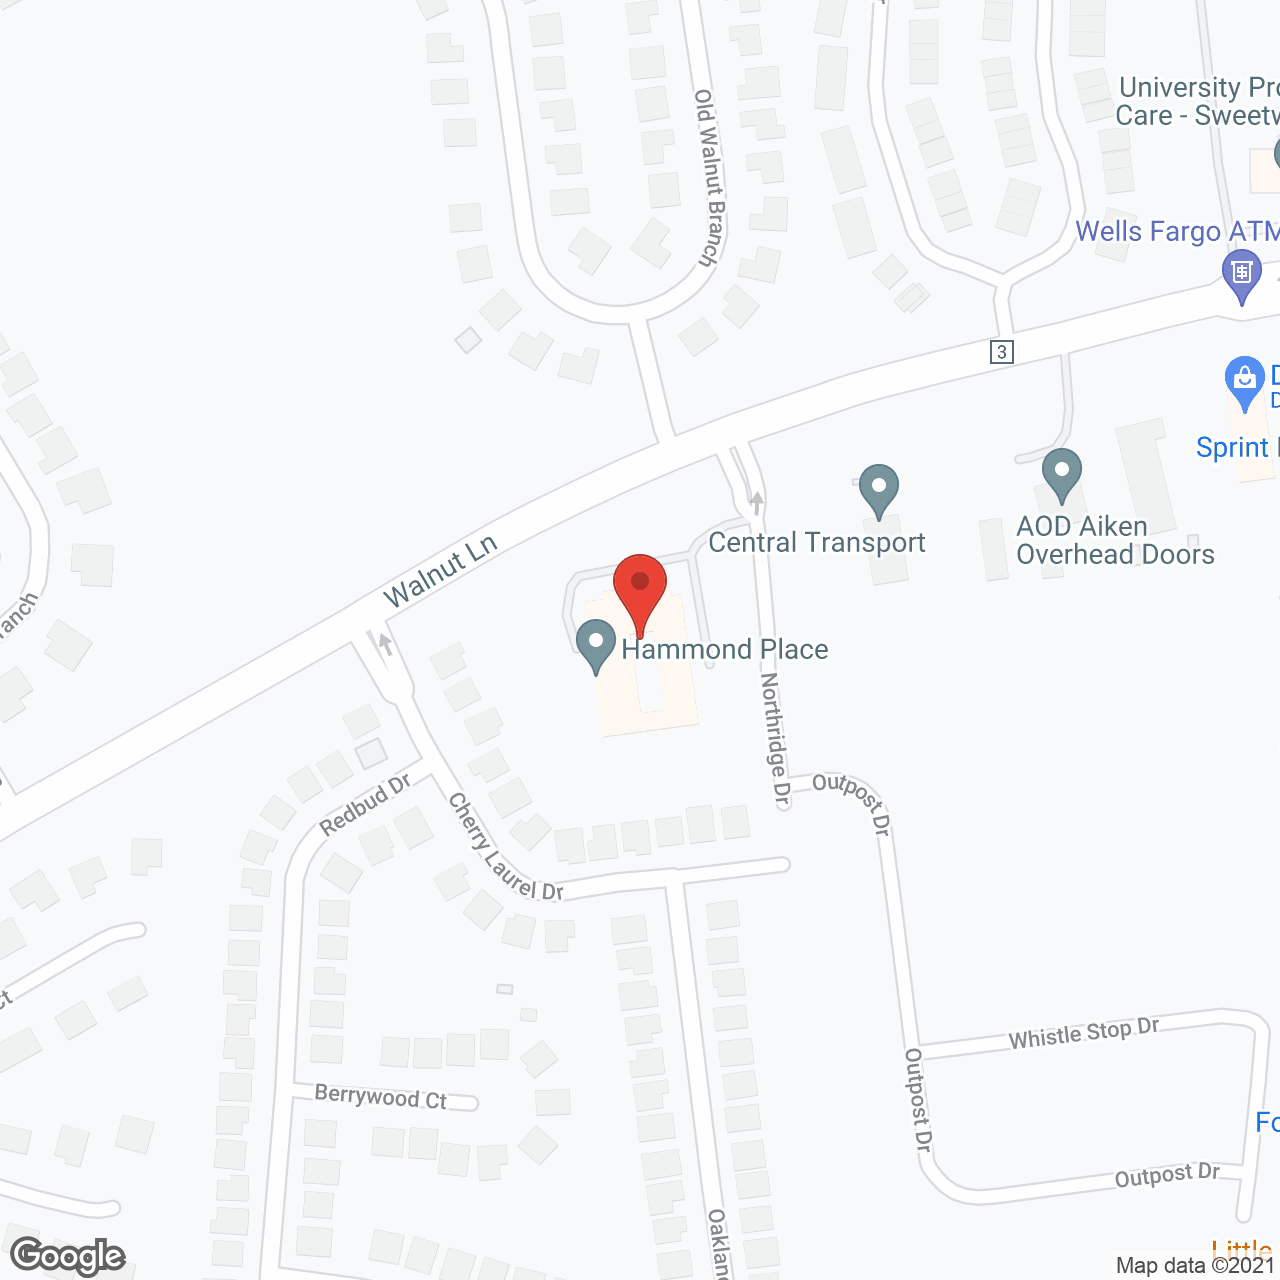 Hammond Place in google map